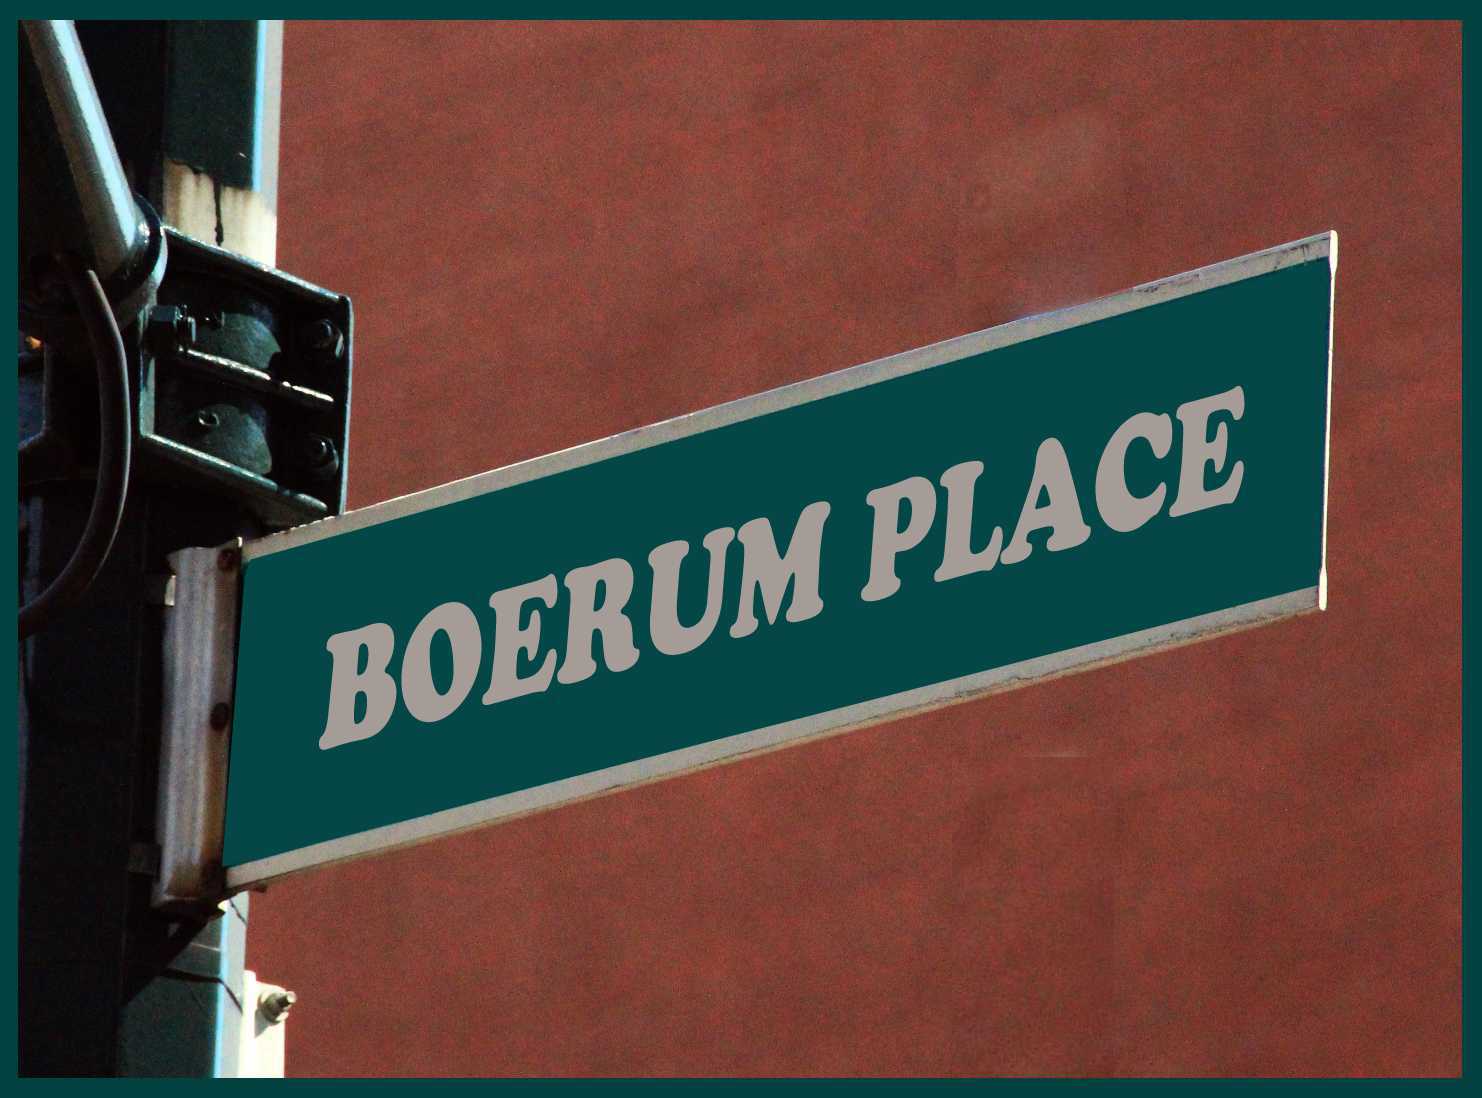 Boerum Place